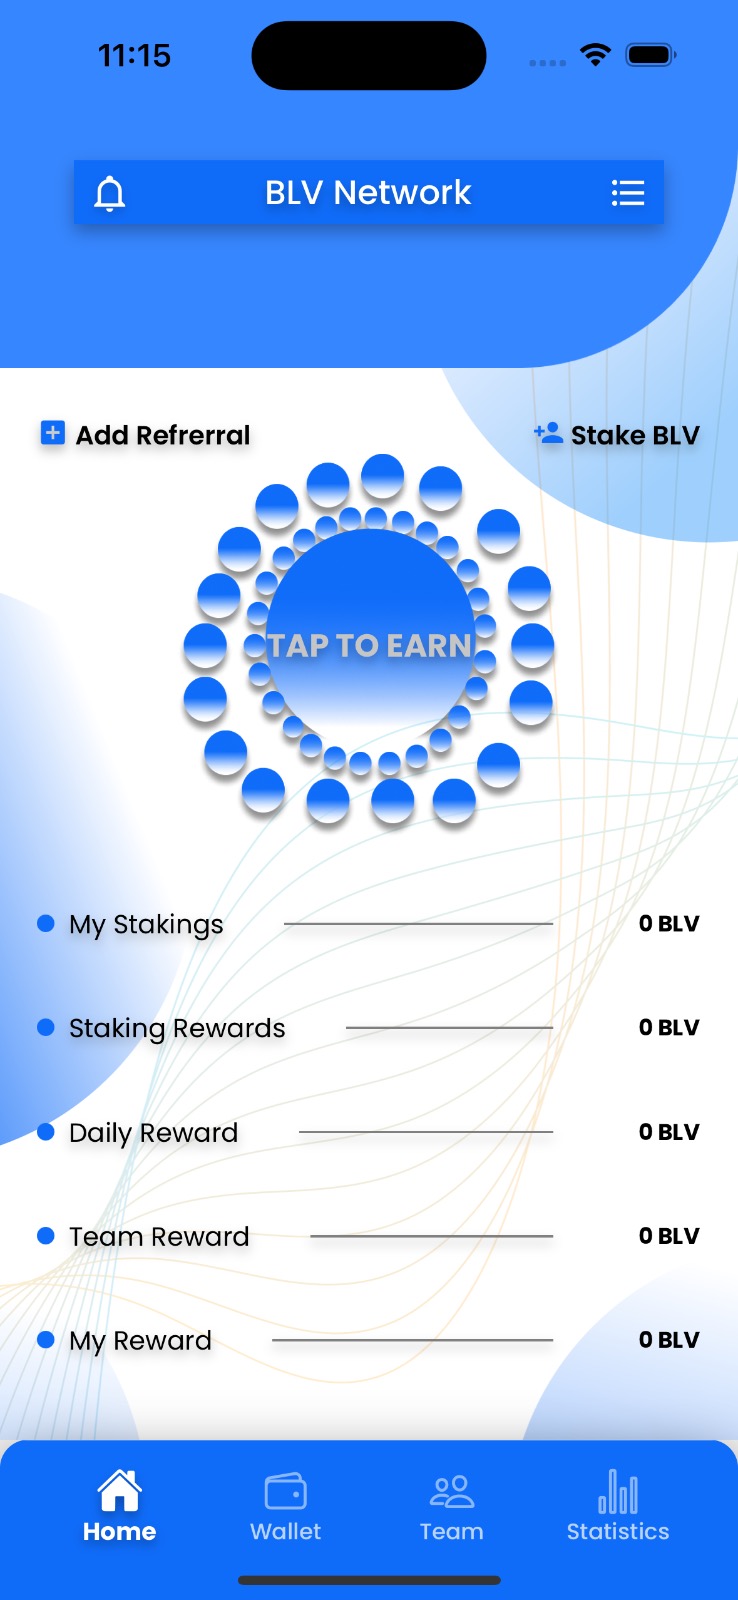 BLV Network Dashboard